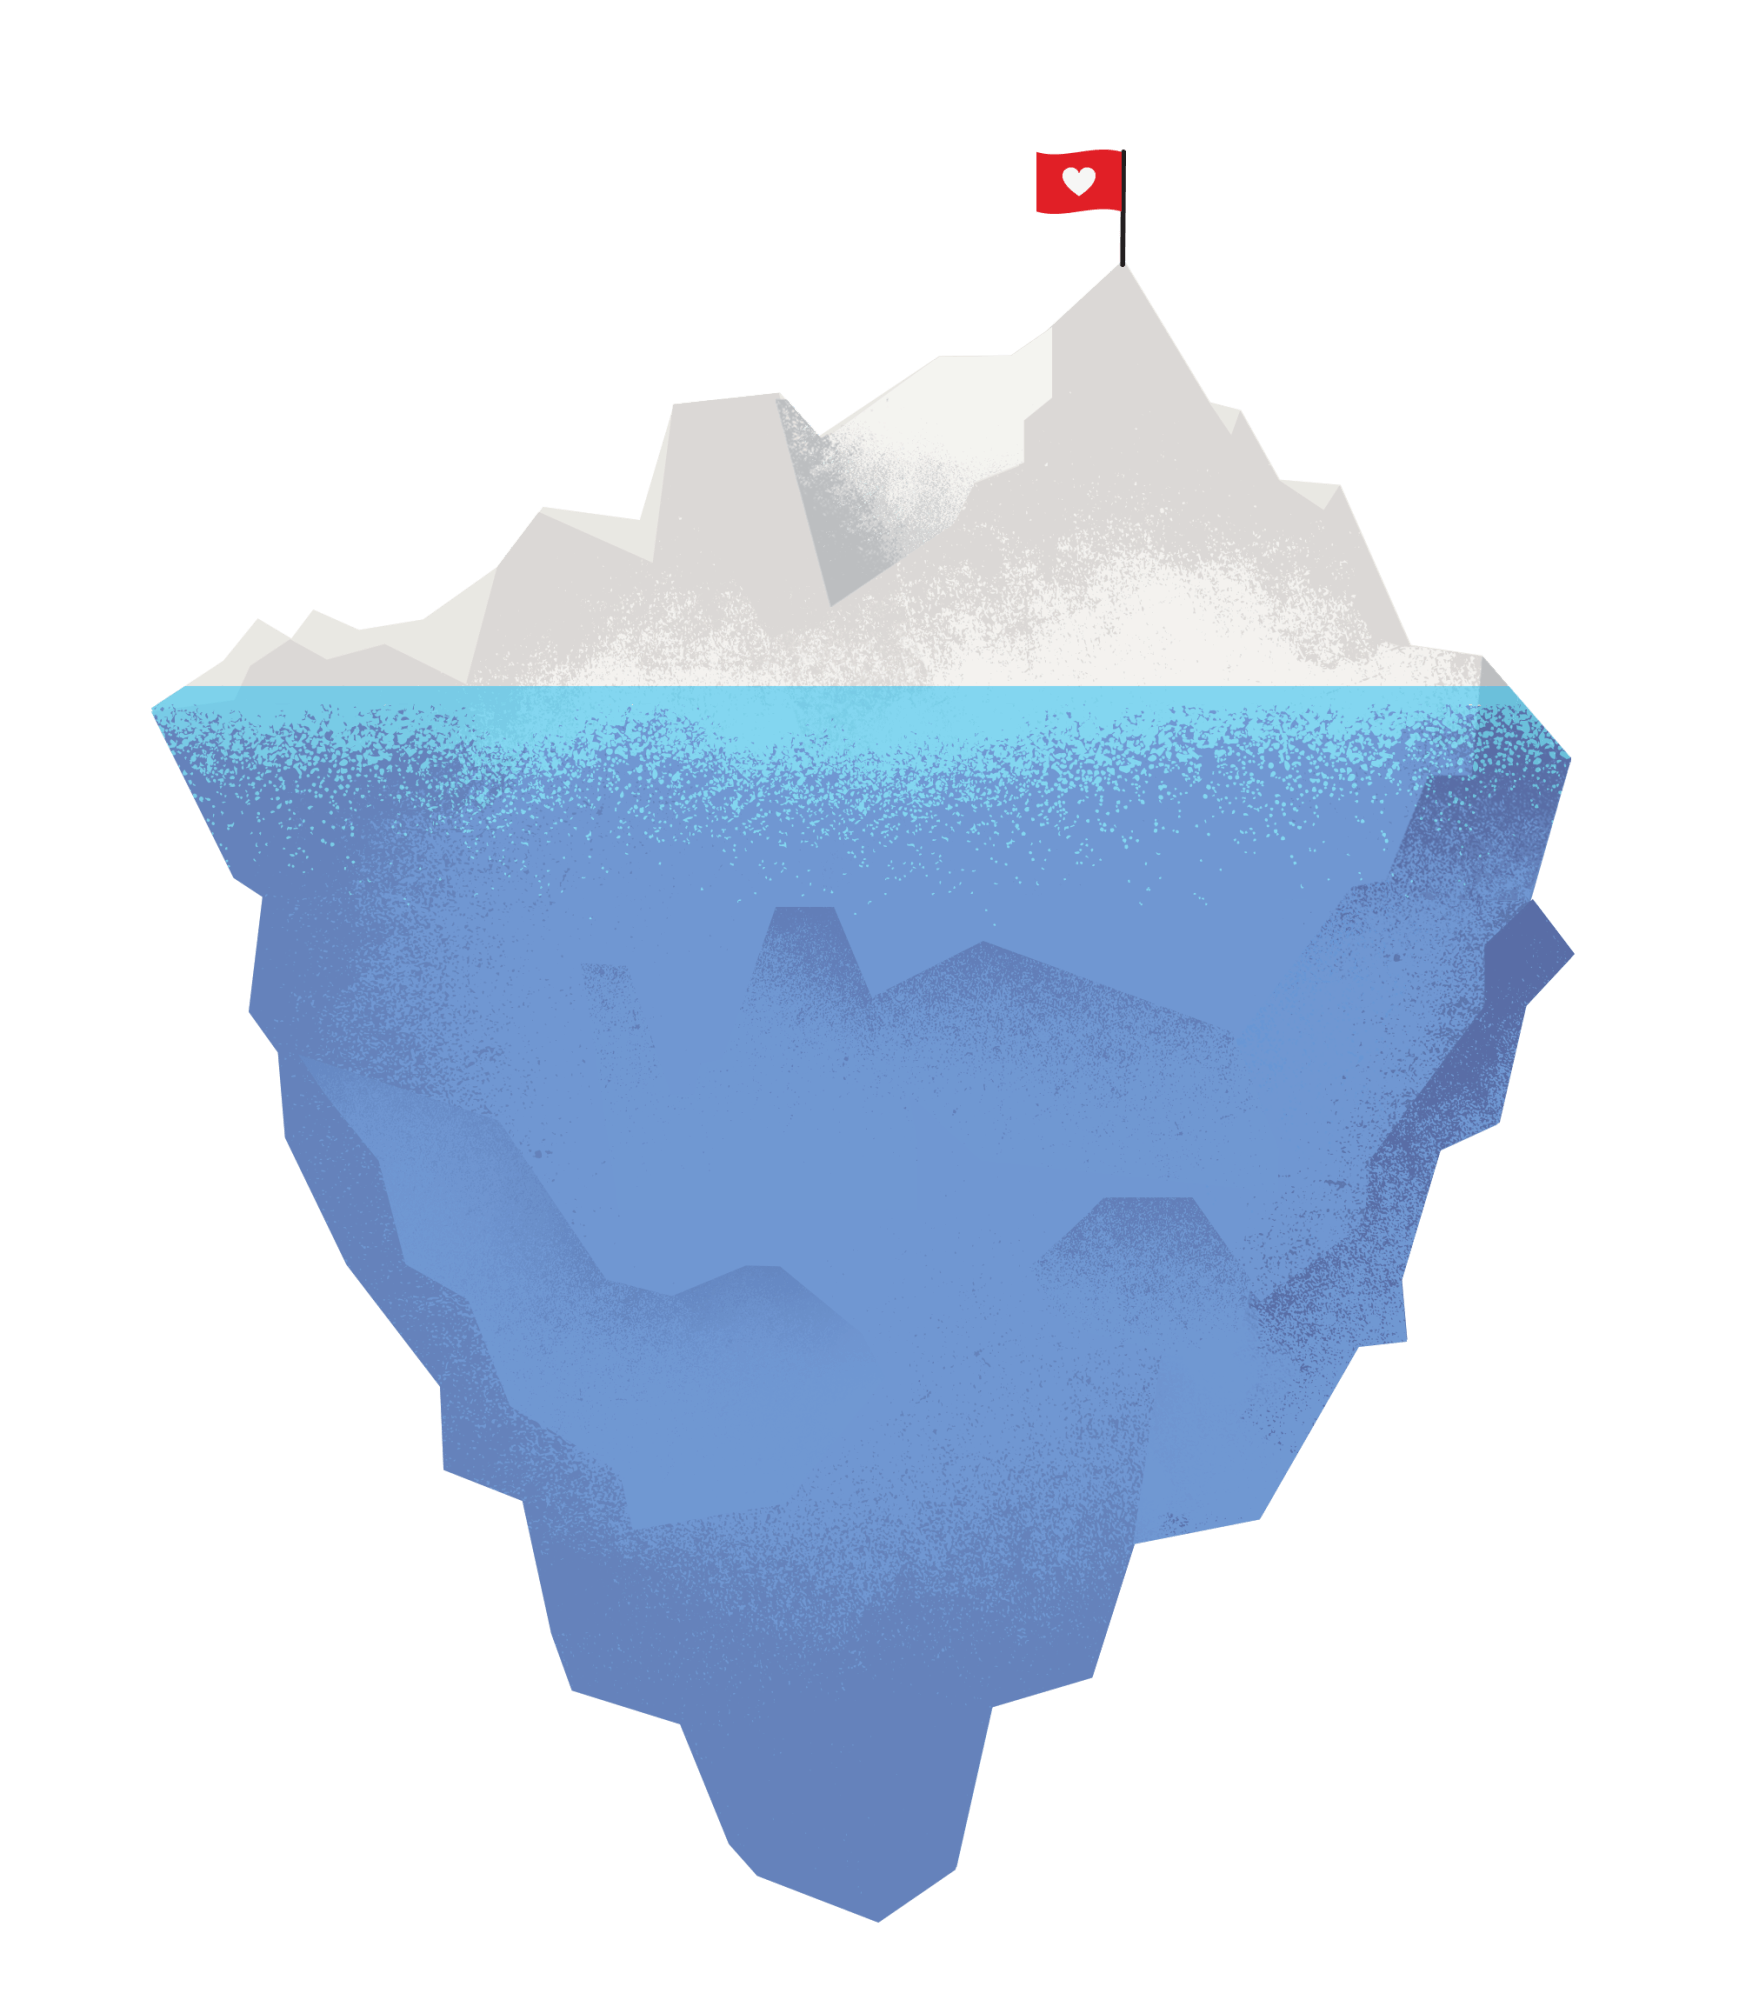 Iceberg Underwater PNG